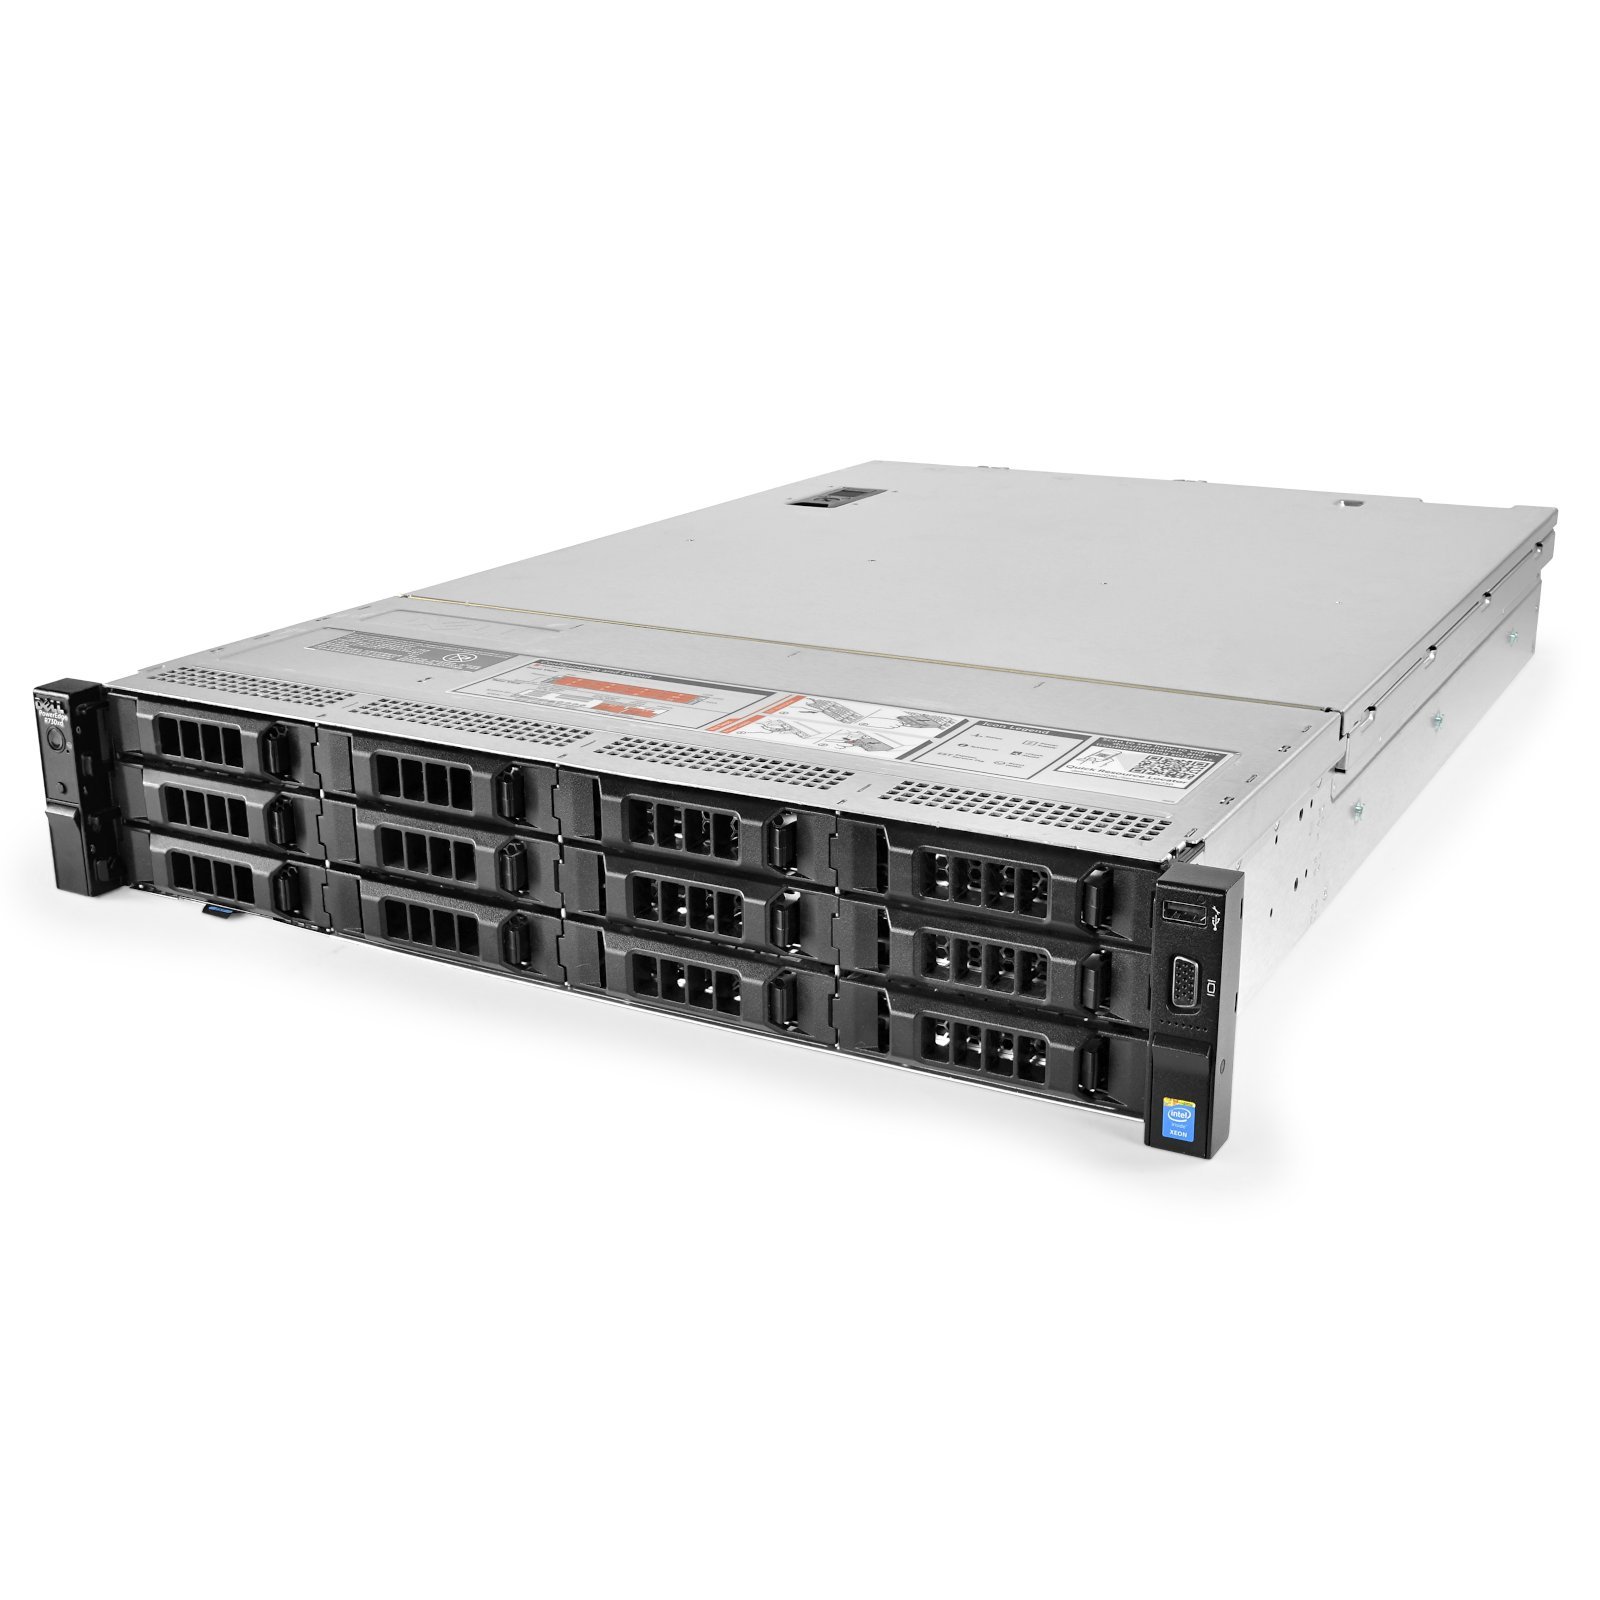 Подробное фото Сервер DELL PowerEdge R730XD Xeon 2x E5-2667v4 192Gb DDR4 2133P 12x noHDD 3.5", SAS RAID Perc H730 mini, 1024Mb, 2*PSU 750W